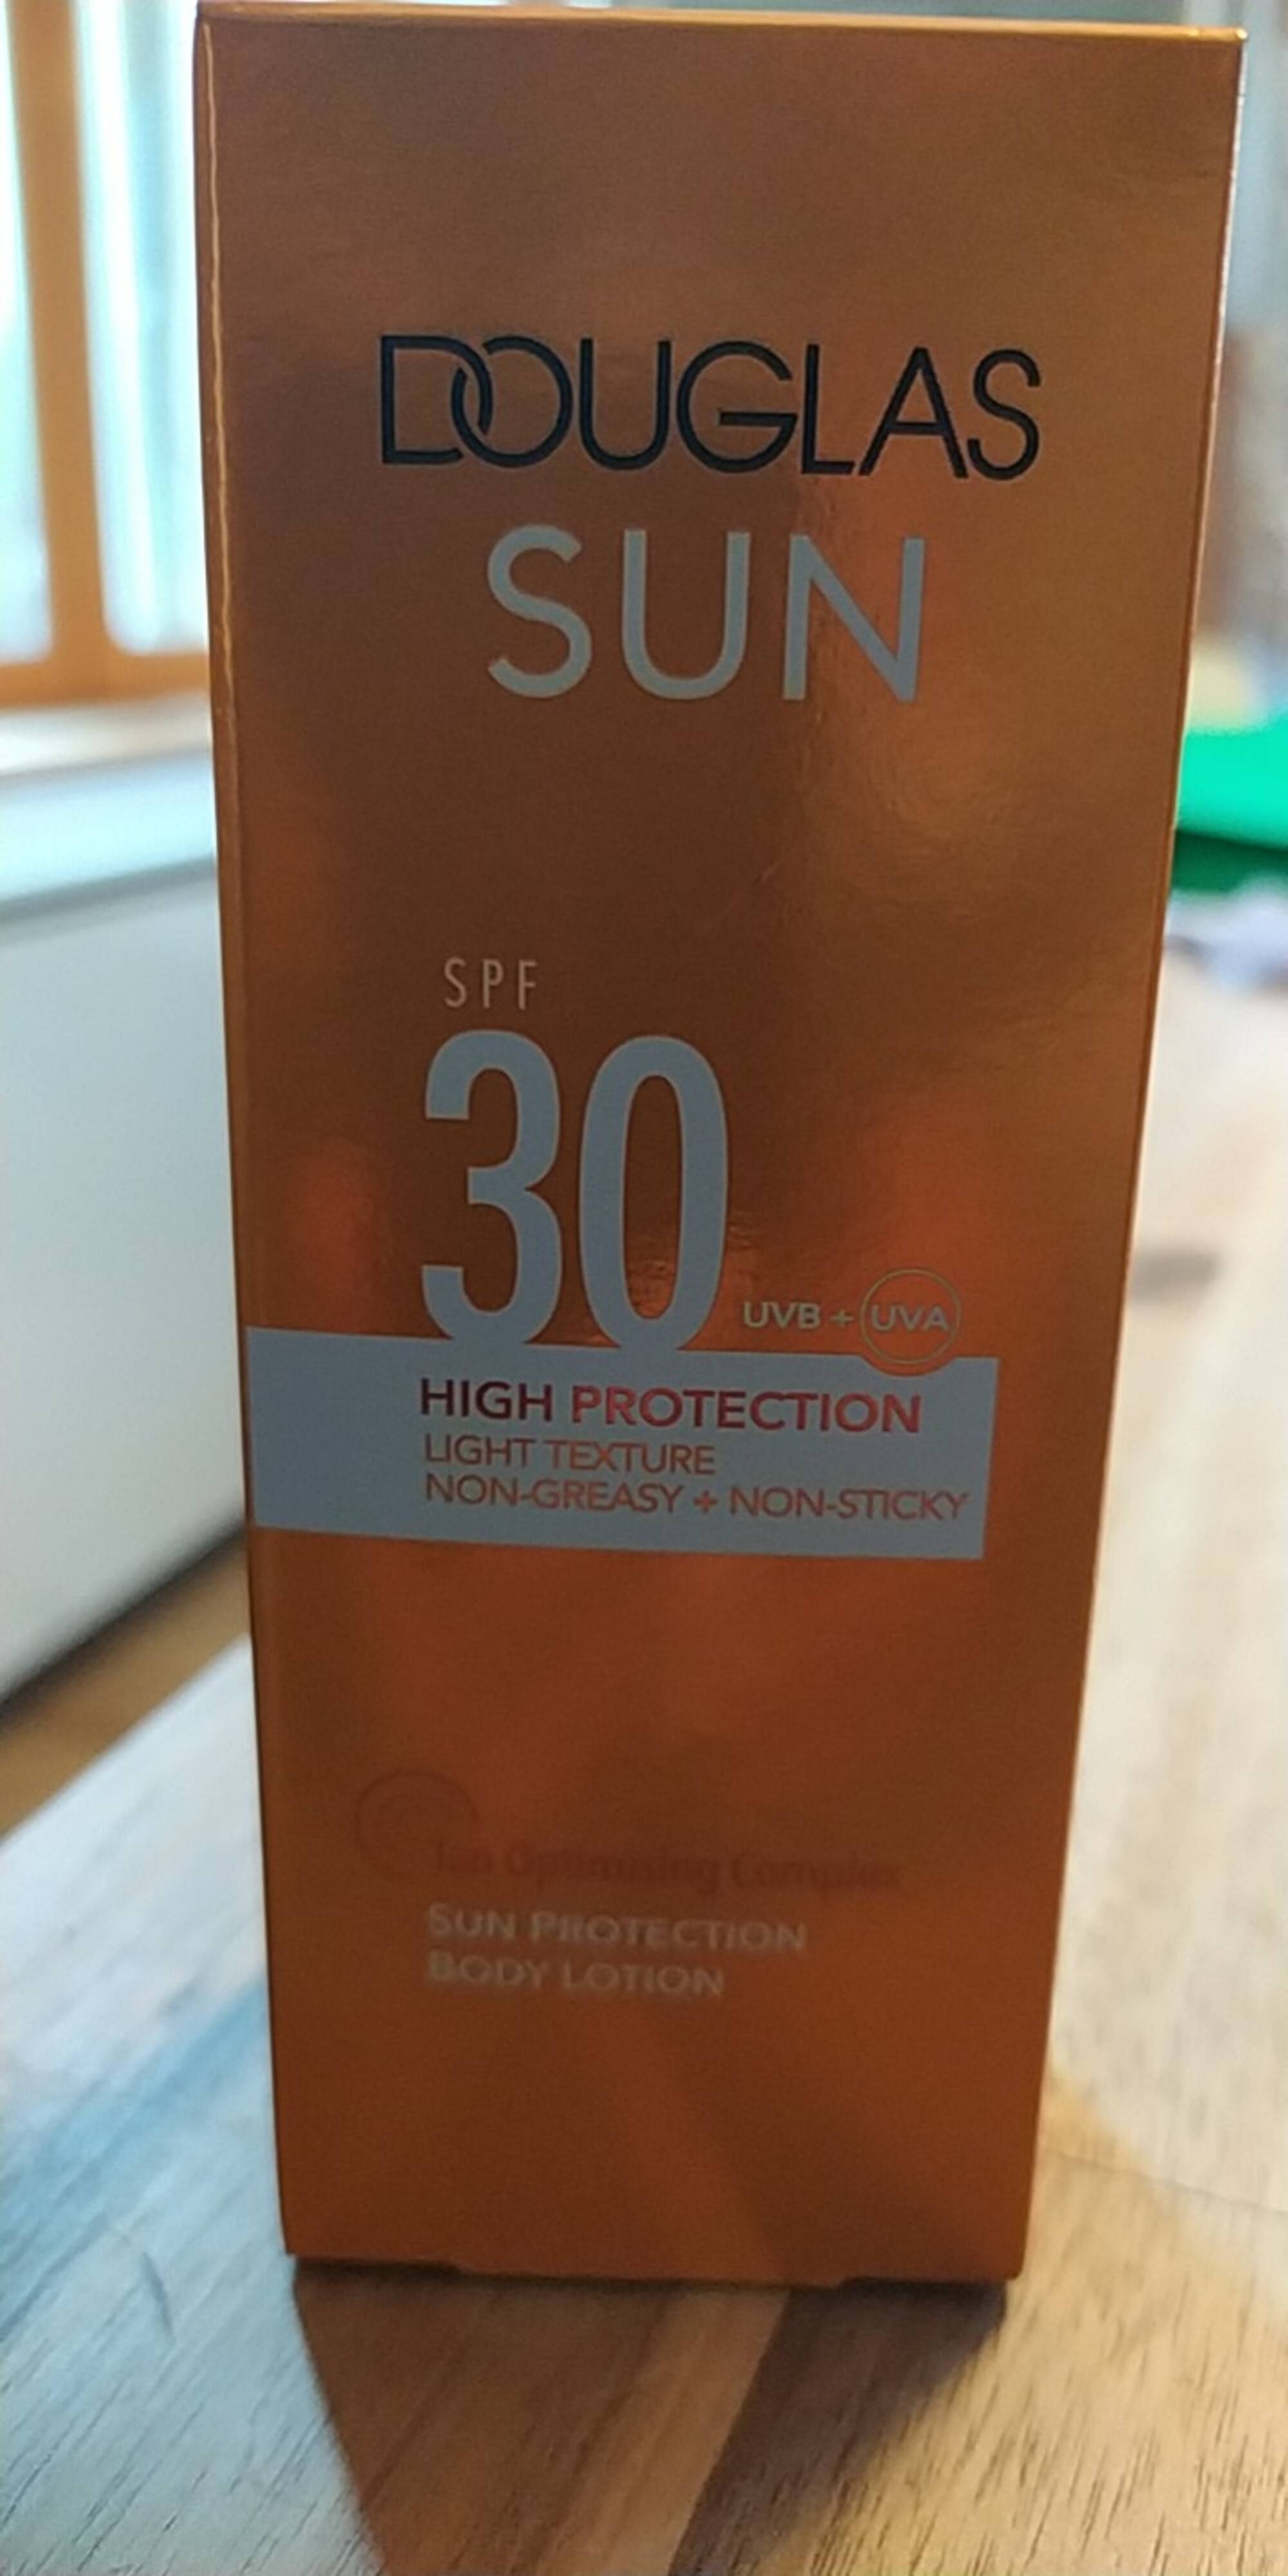 DOUGLAS - Douglas sun - Body lotion SPF 30 high protection